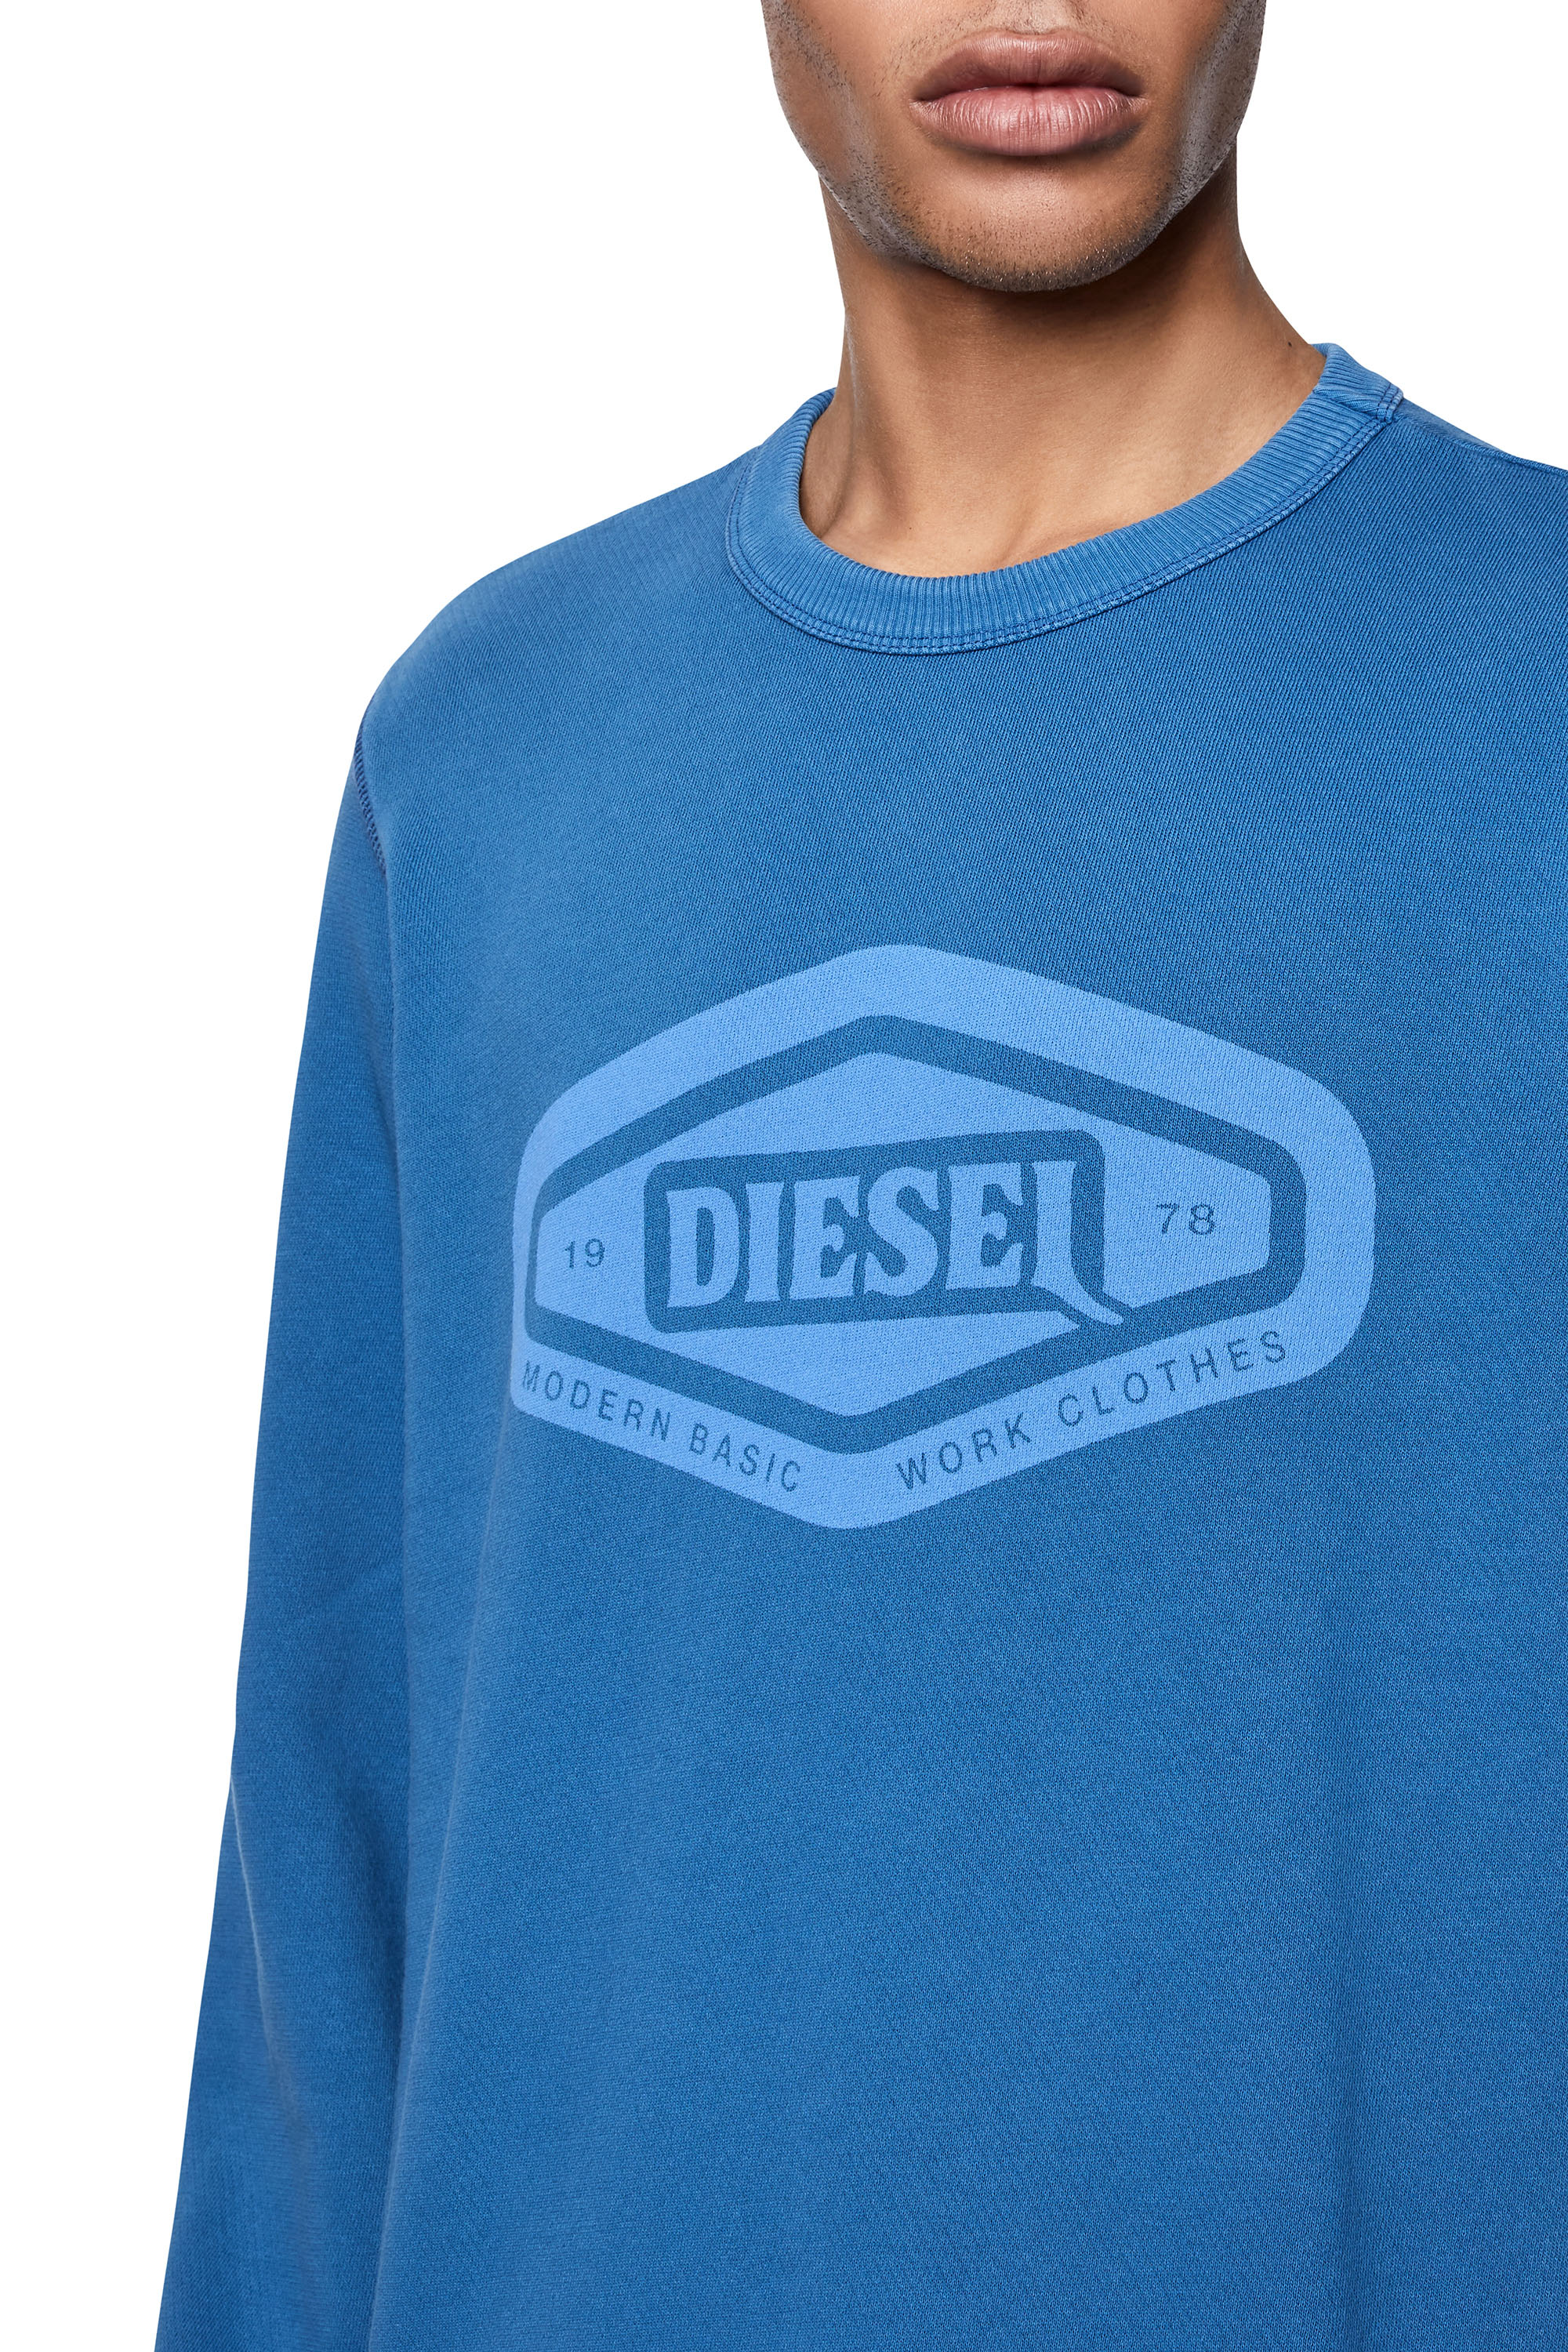 Diesel - S-GINN-D1, Blue - Image 5